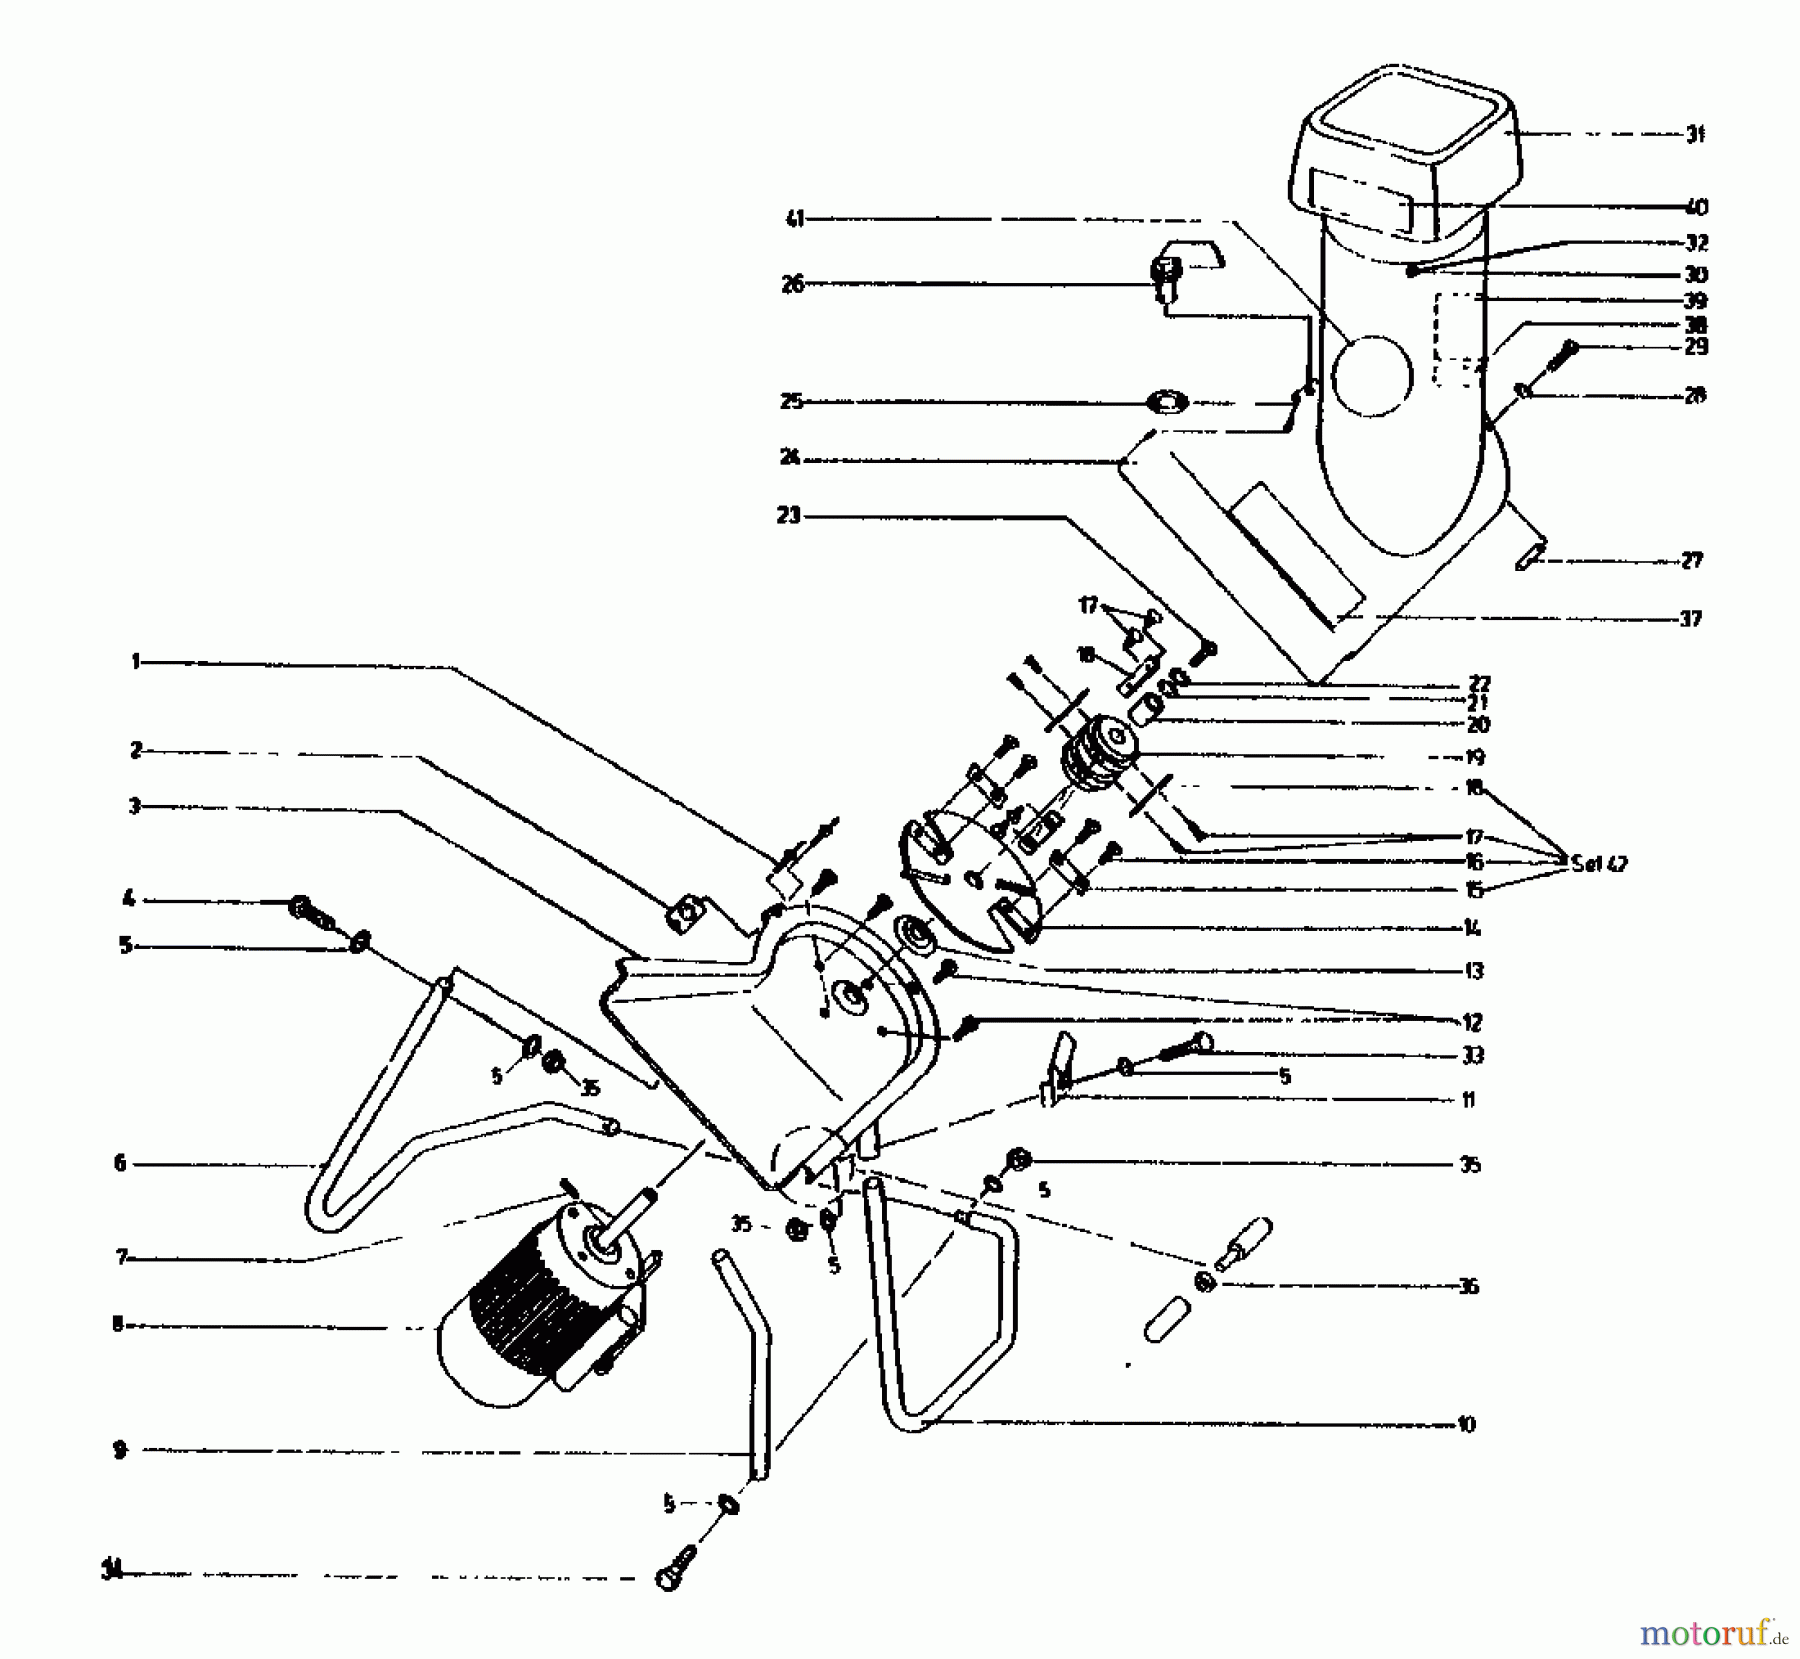  Gutbrod Broyeur GAE 18 04002.04  (1991) Machine de base